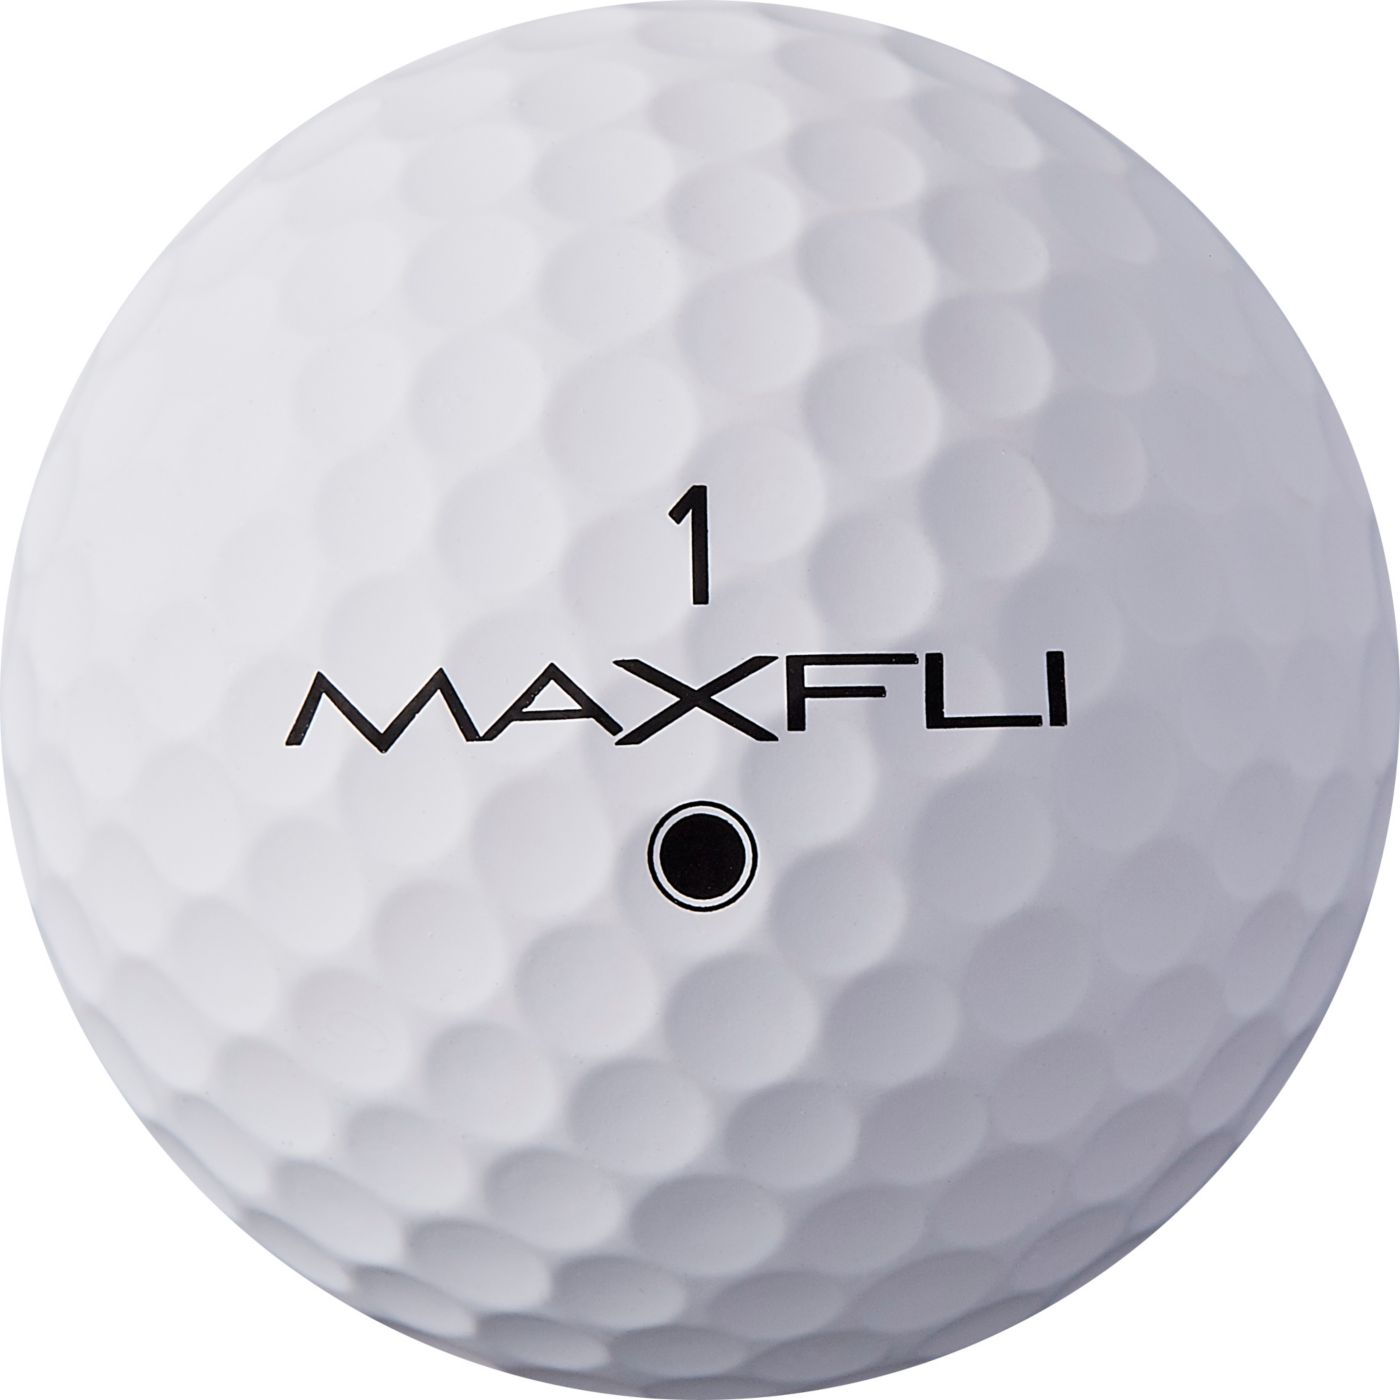 Maxfli 2019 Tour Matte White Golf Balls Golf Galaxy